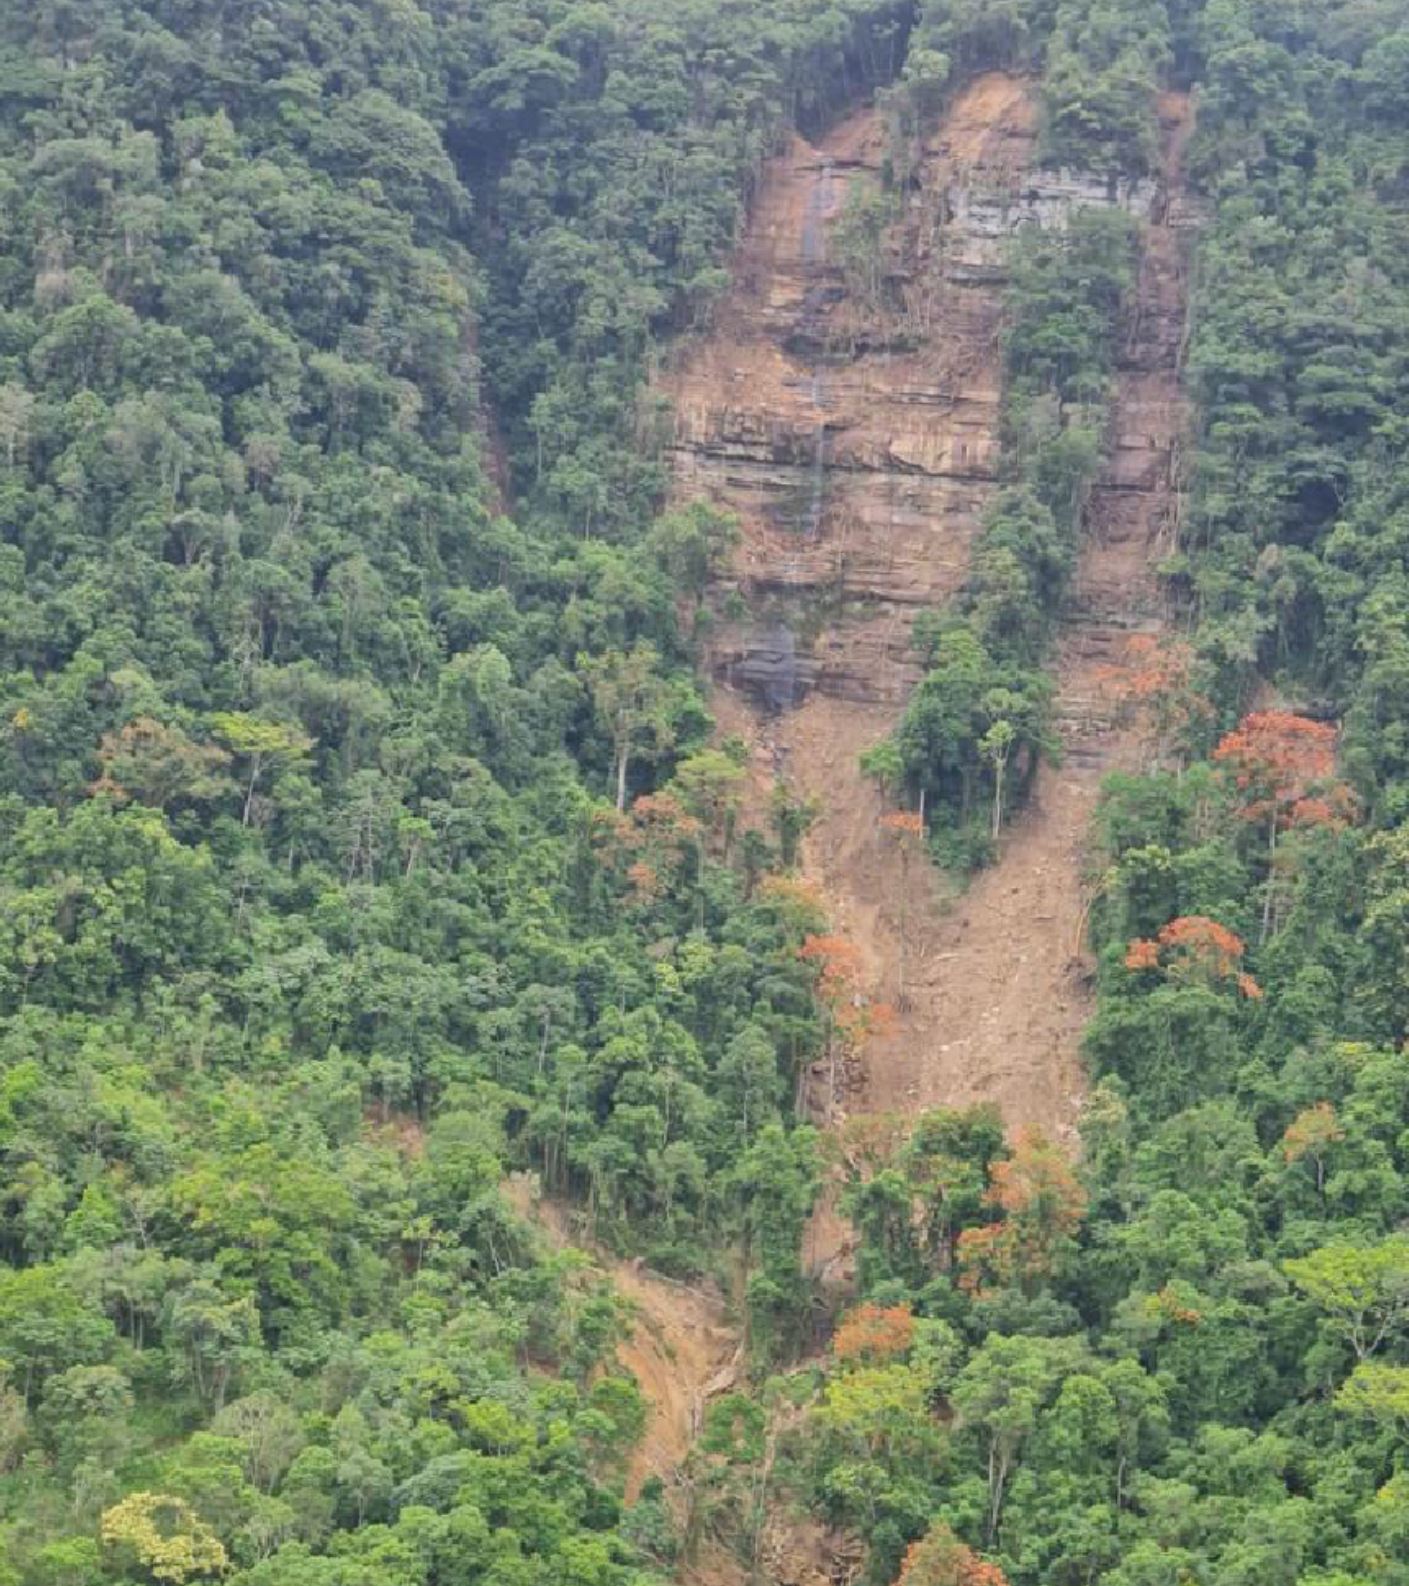 Landslides in the Revólver Creek valley. Photo by Renato Lima.